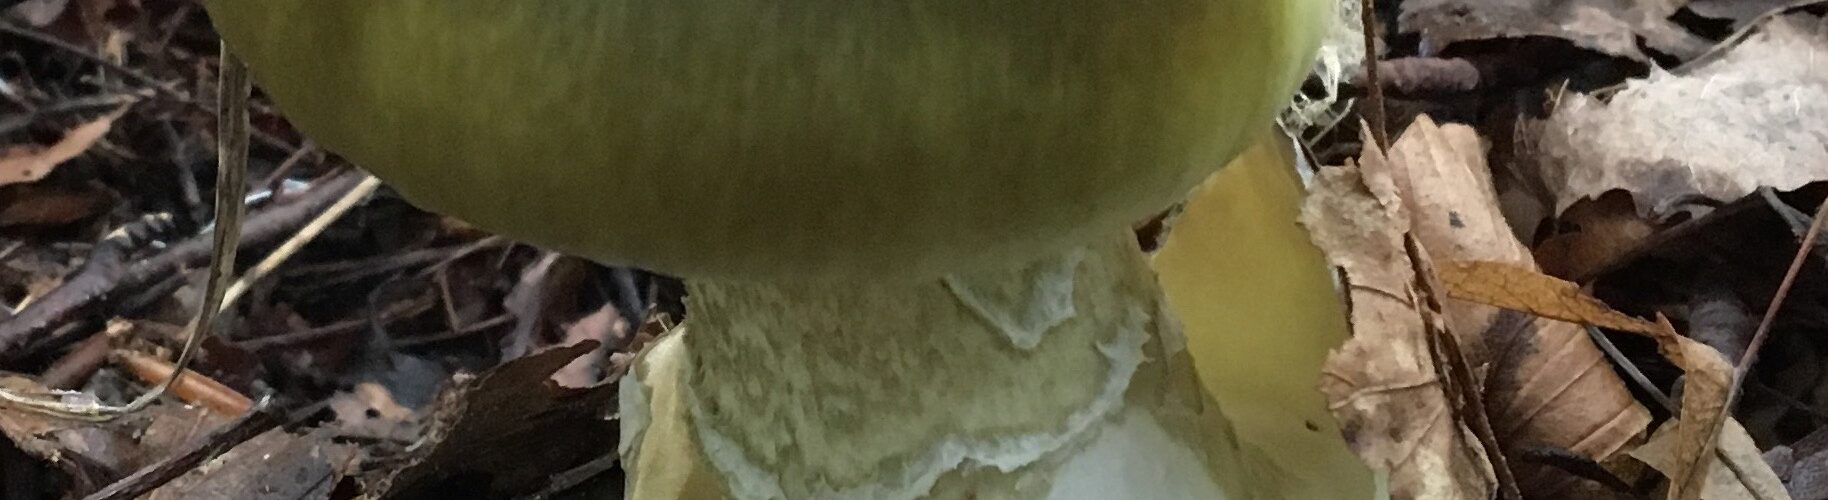 Lömsk flugsvamp, Amanita phalloides